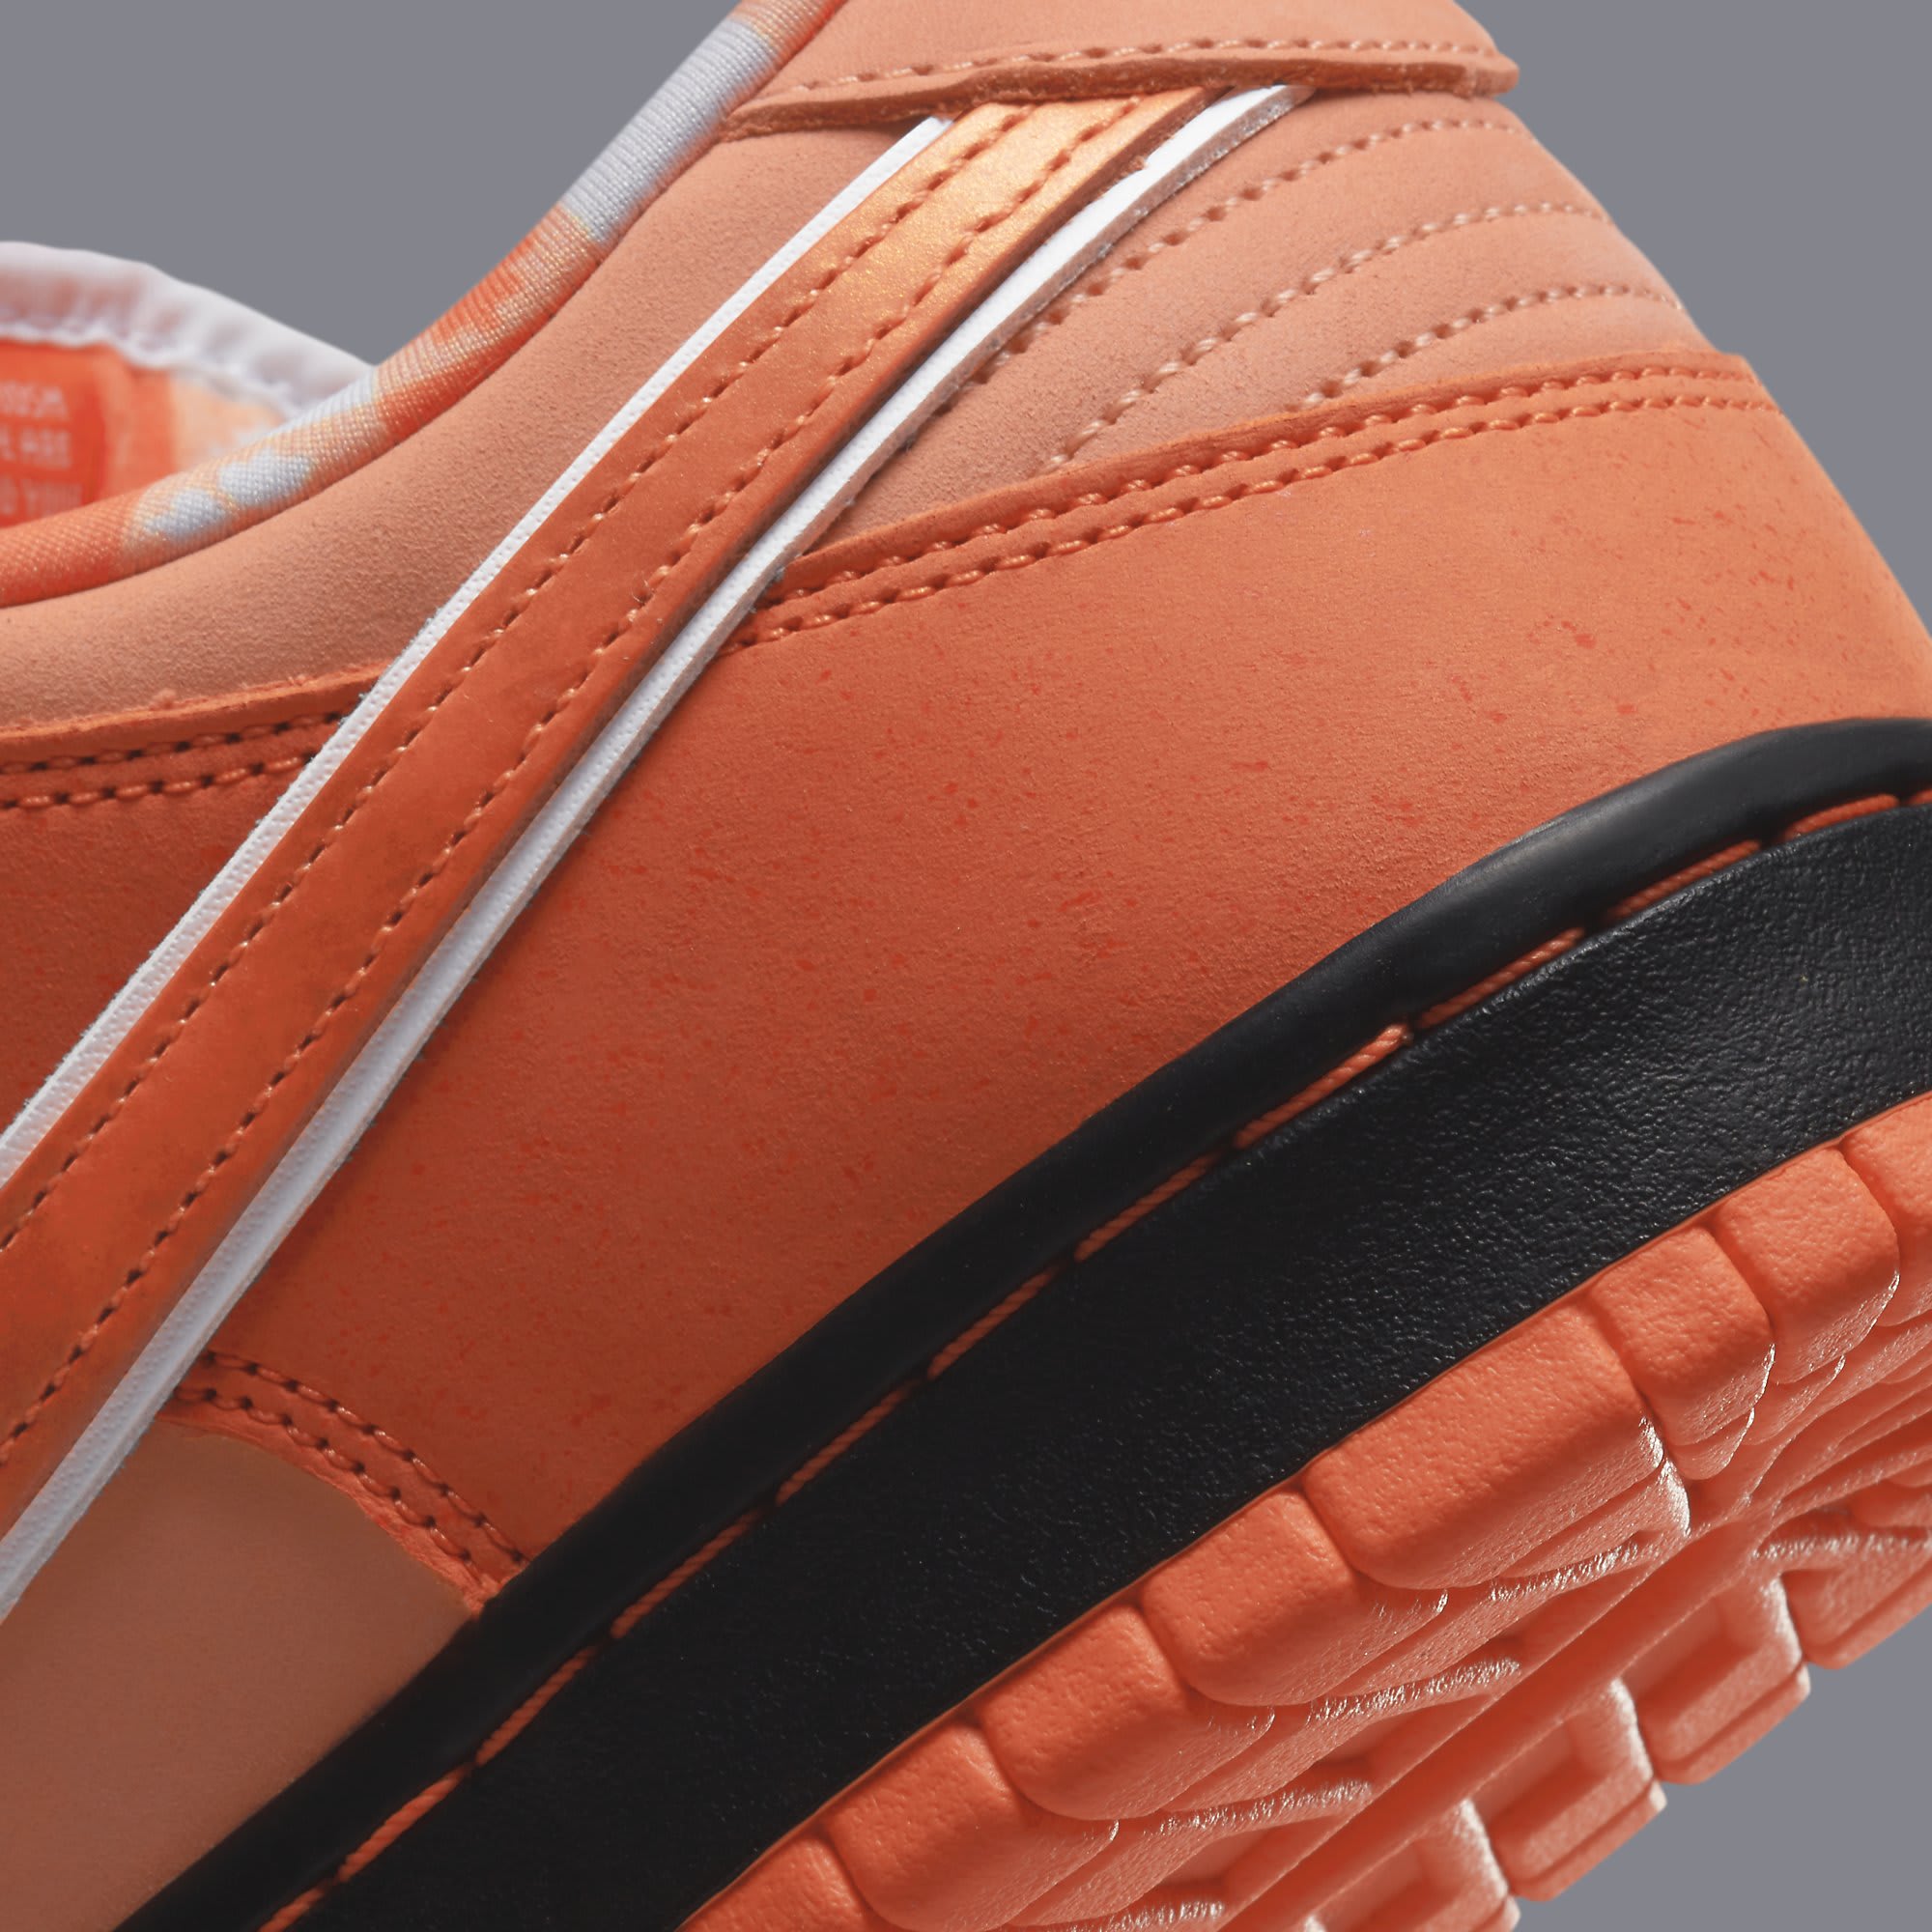 Concepts x Nike SB Dunk Low 'Orange Lobster' Release Date FD8776